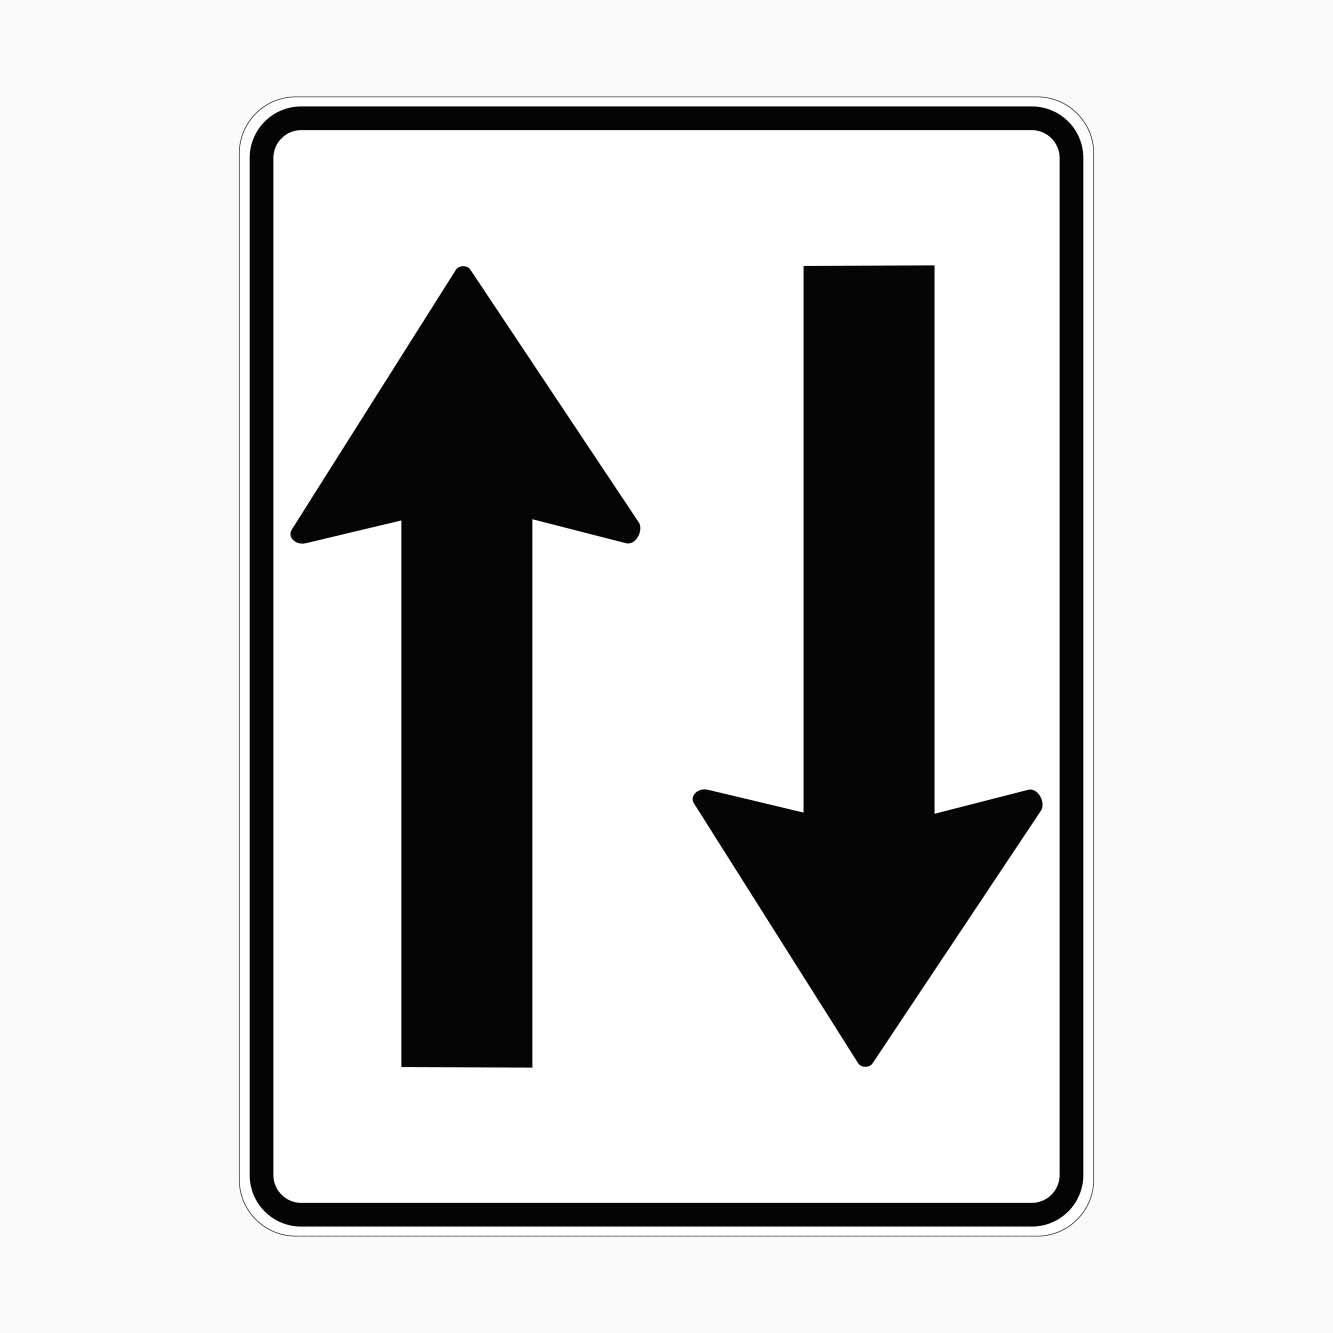 TWO WAY TRAFFIC SIGN R2-11 REGULATORY SIGN